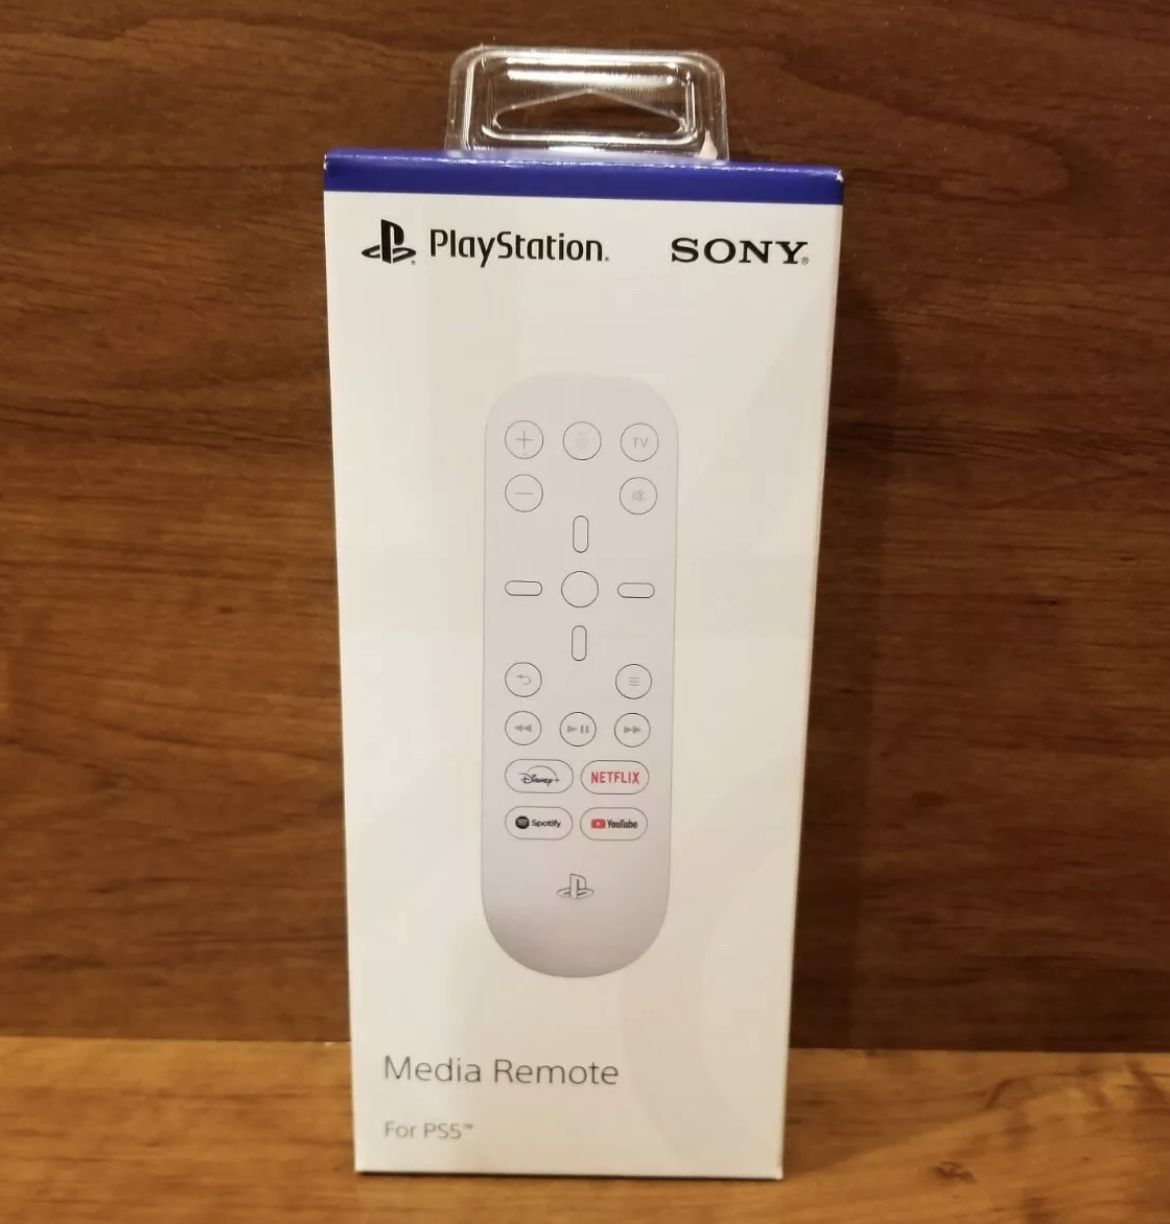 Sony Playstation 5 PS5 - Media Remote - Brand New!